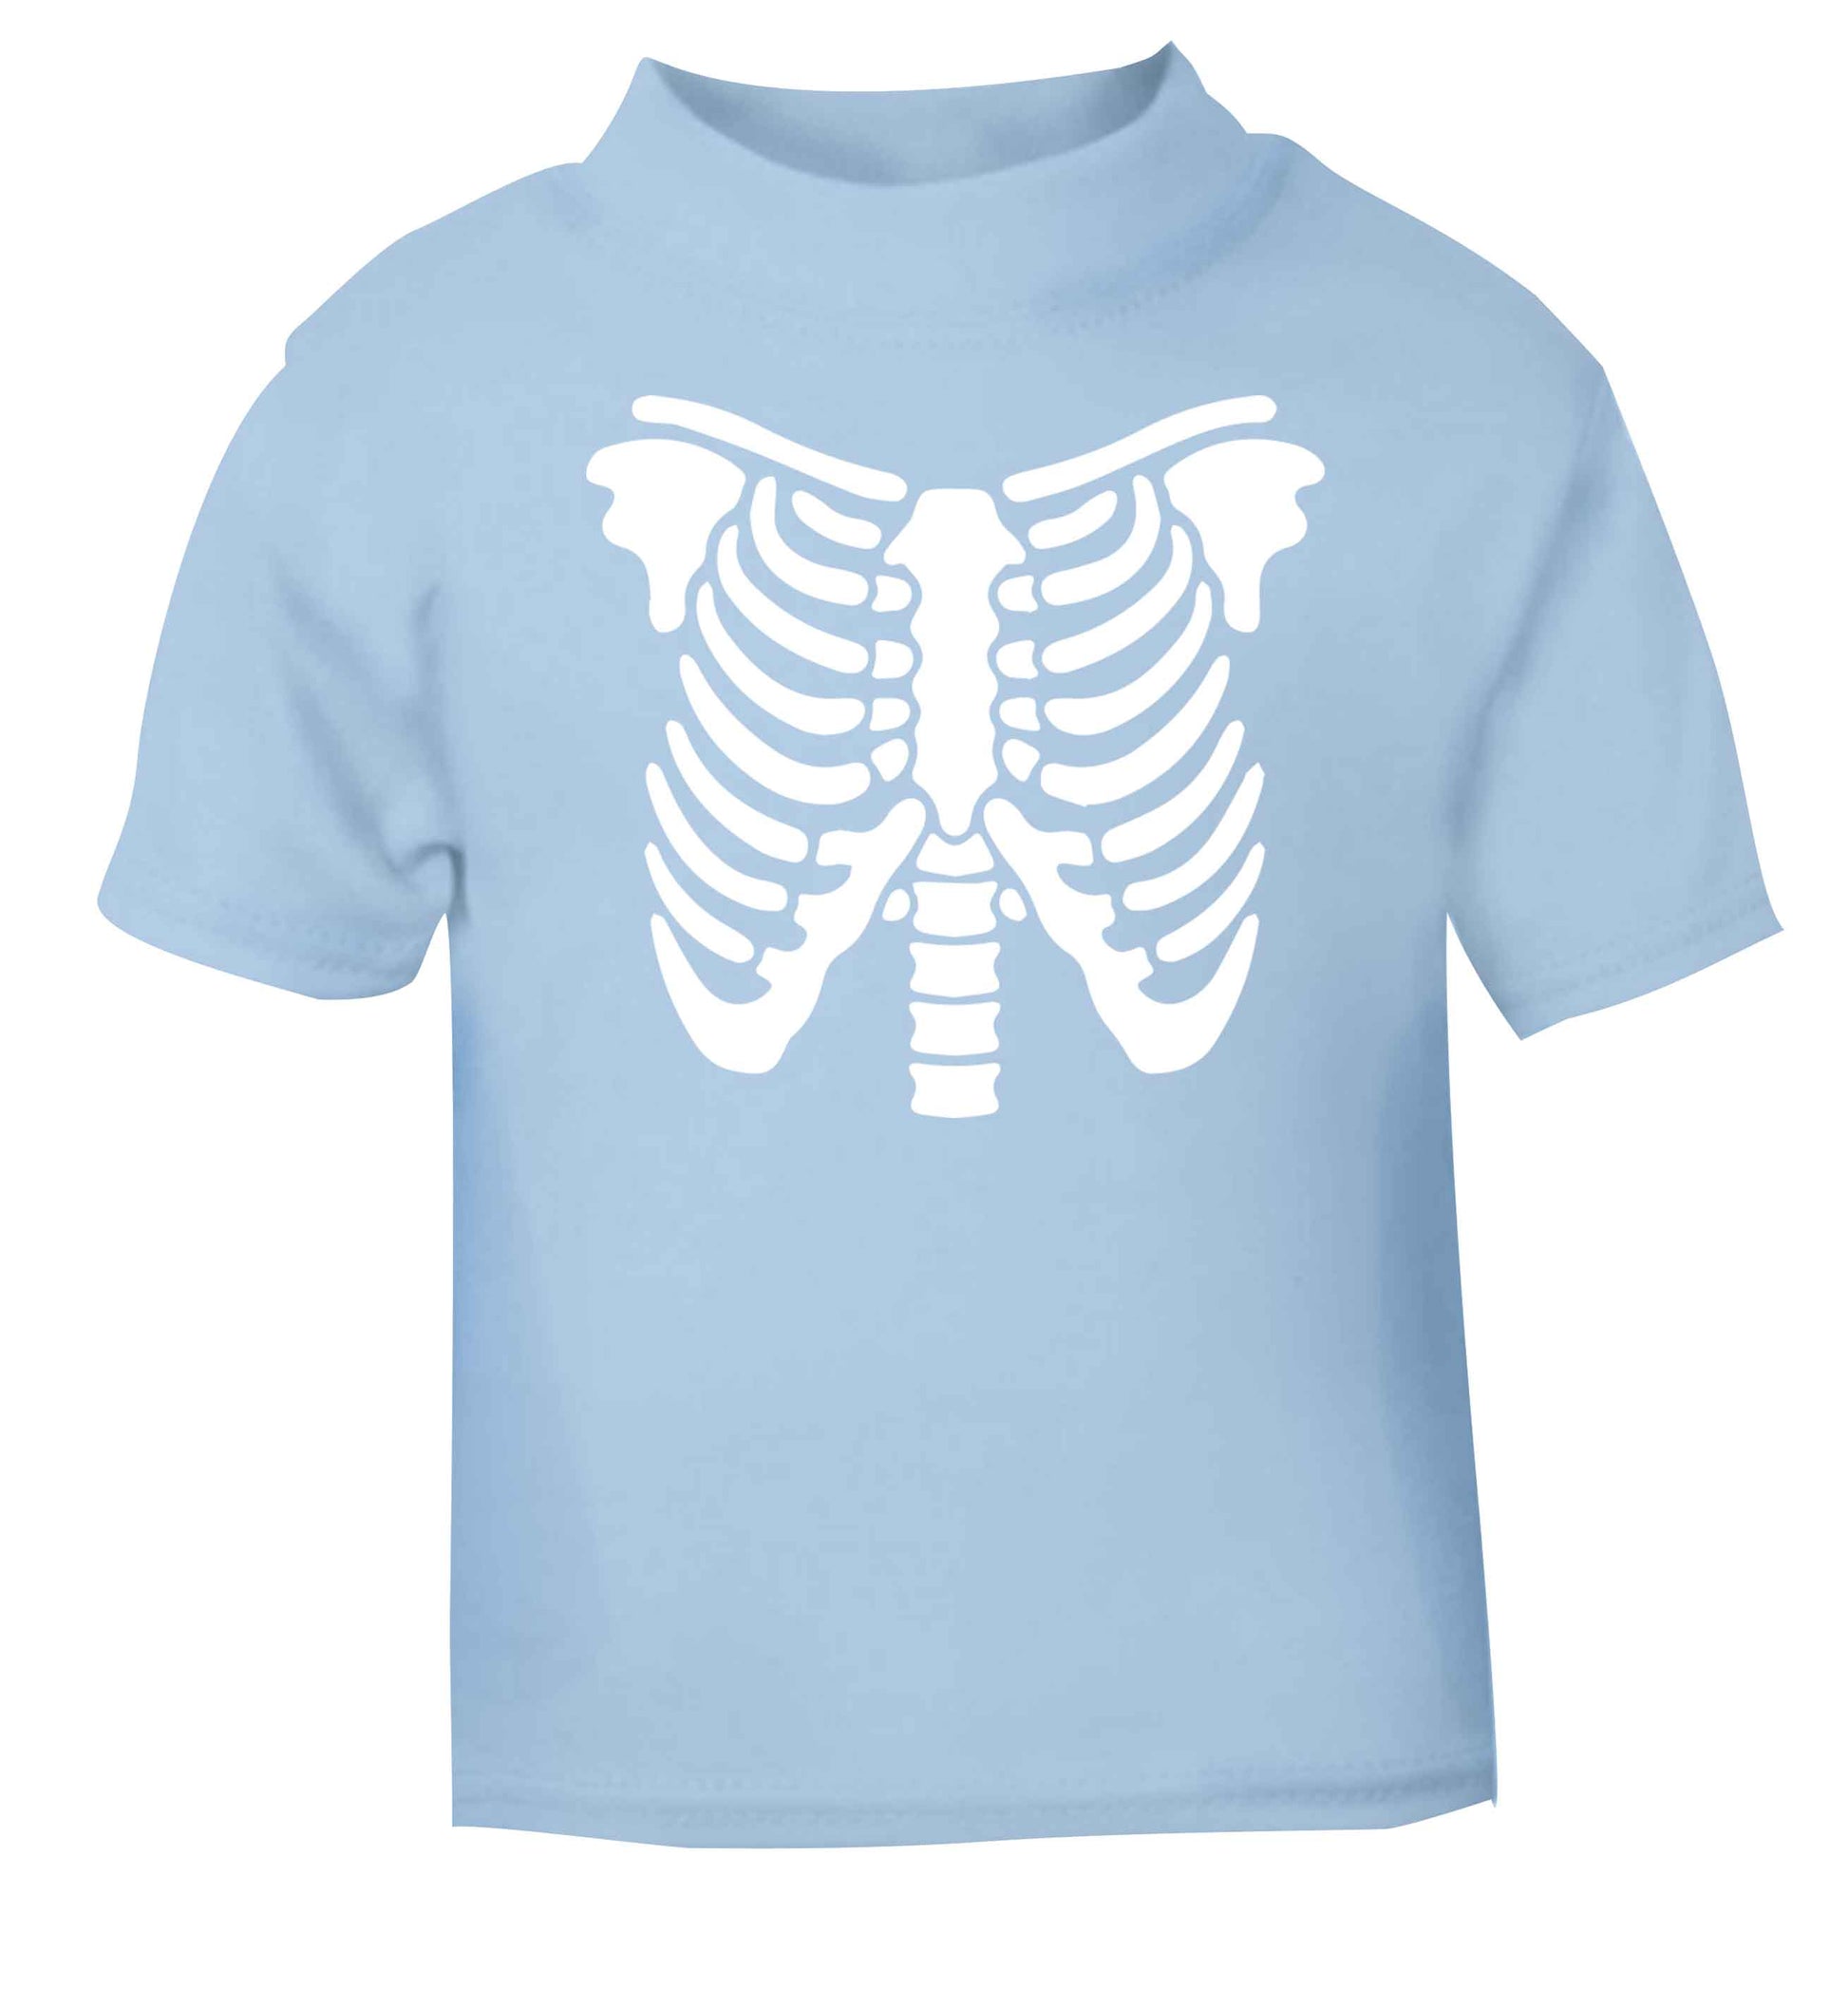 Skeleton ribcage light blue baby toddler Tshirt 2 Years